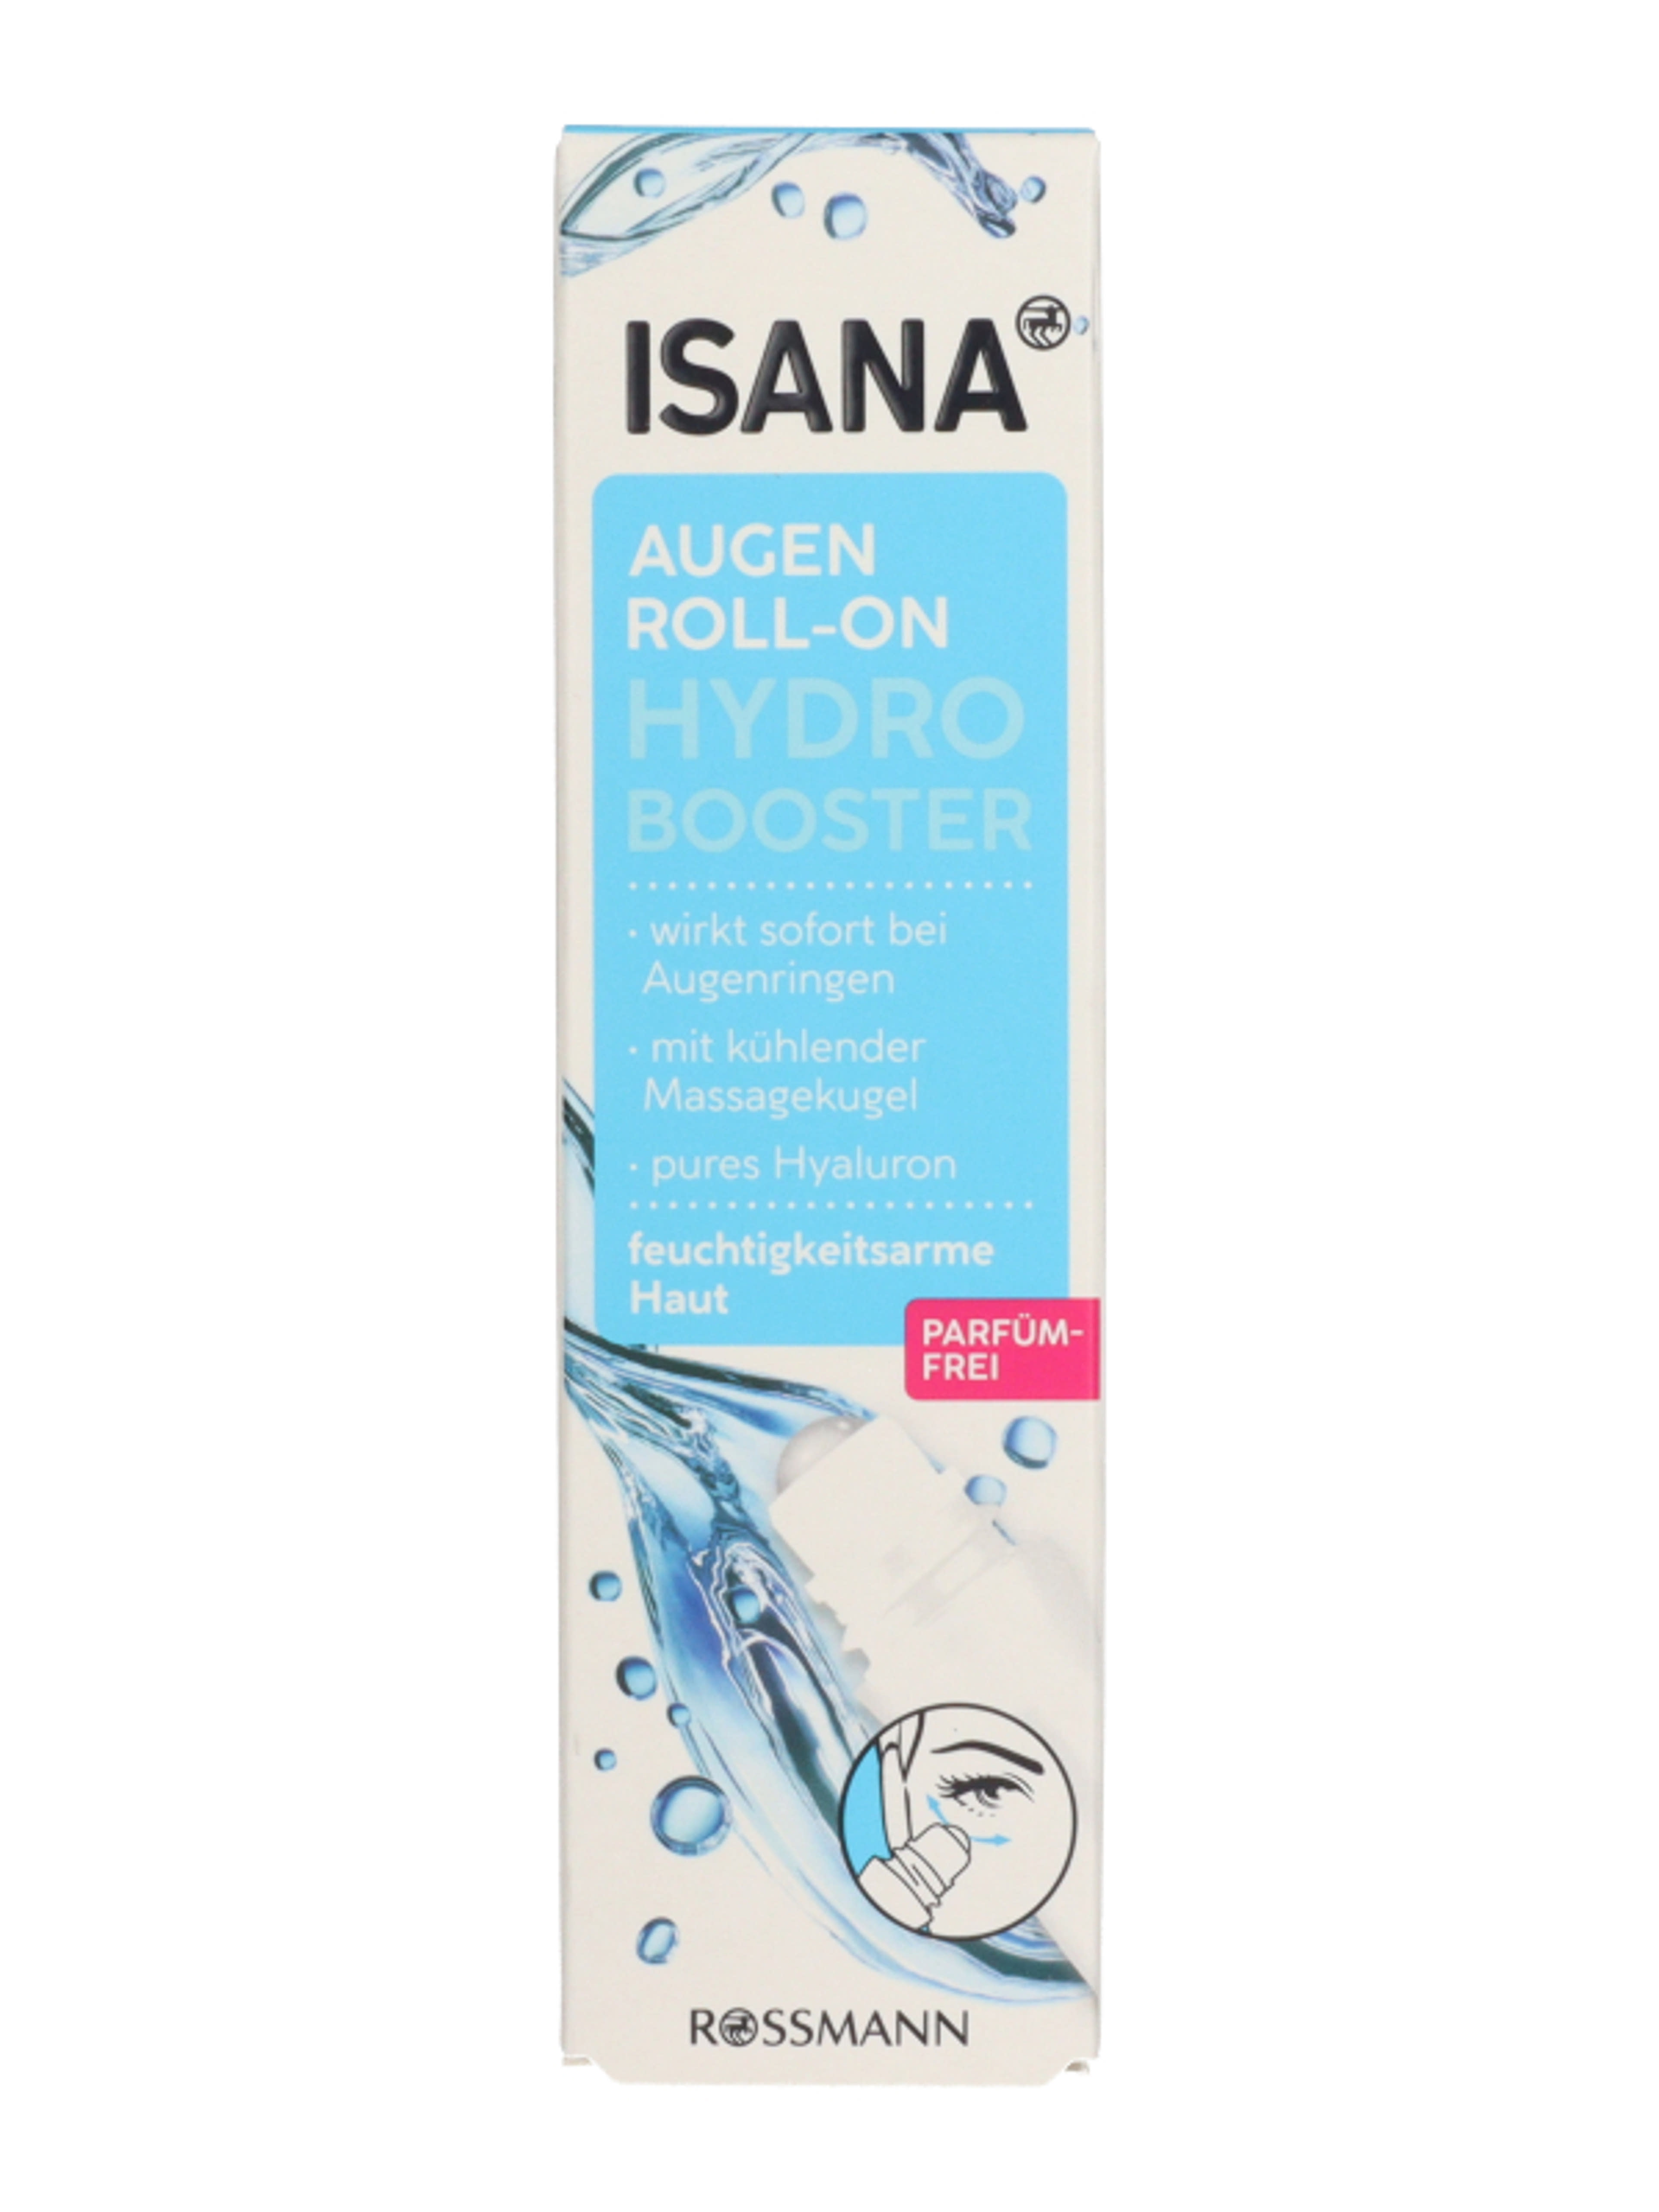 Isana hydro booster szem roller - 15 ml-3